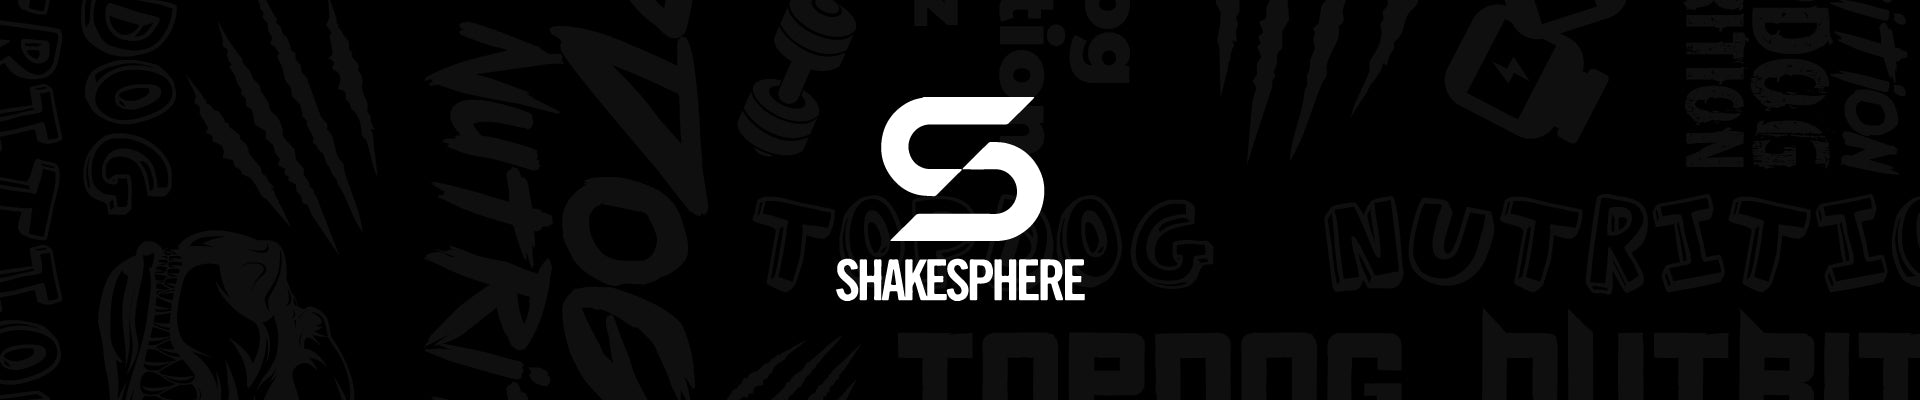 Shakesphere Tumblrs & Shakers